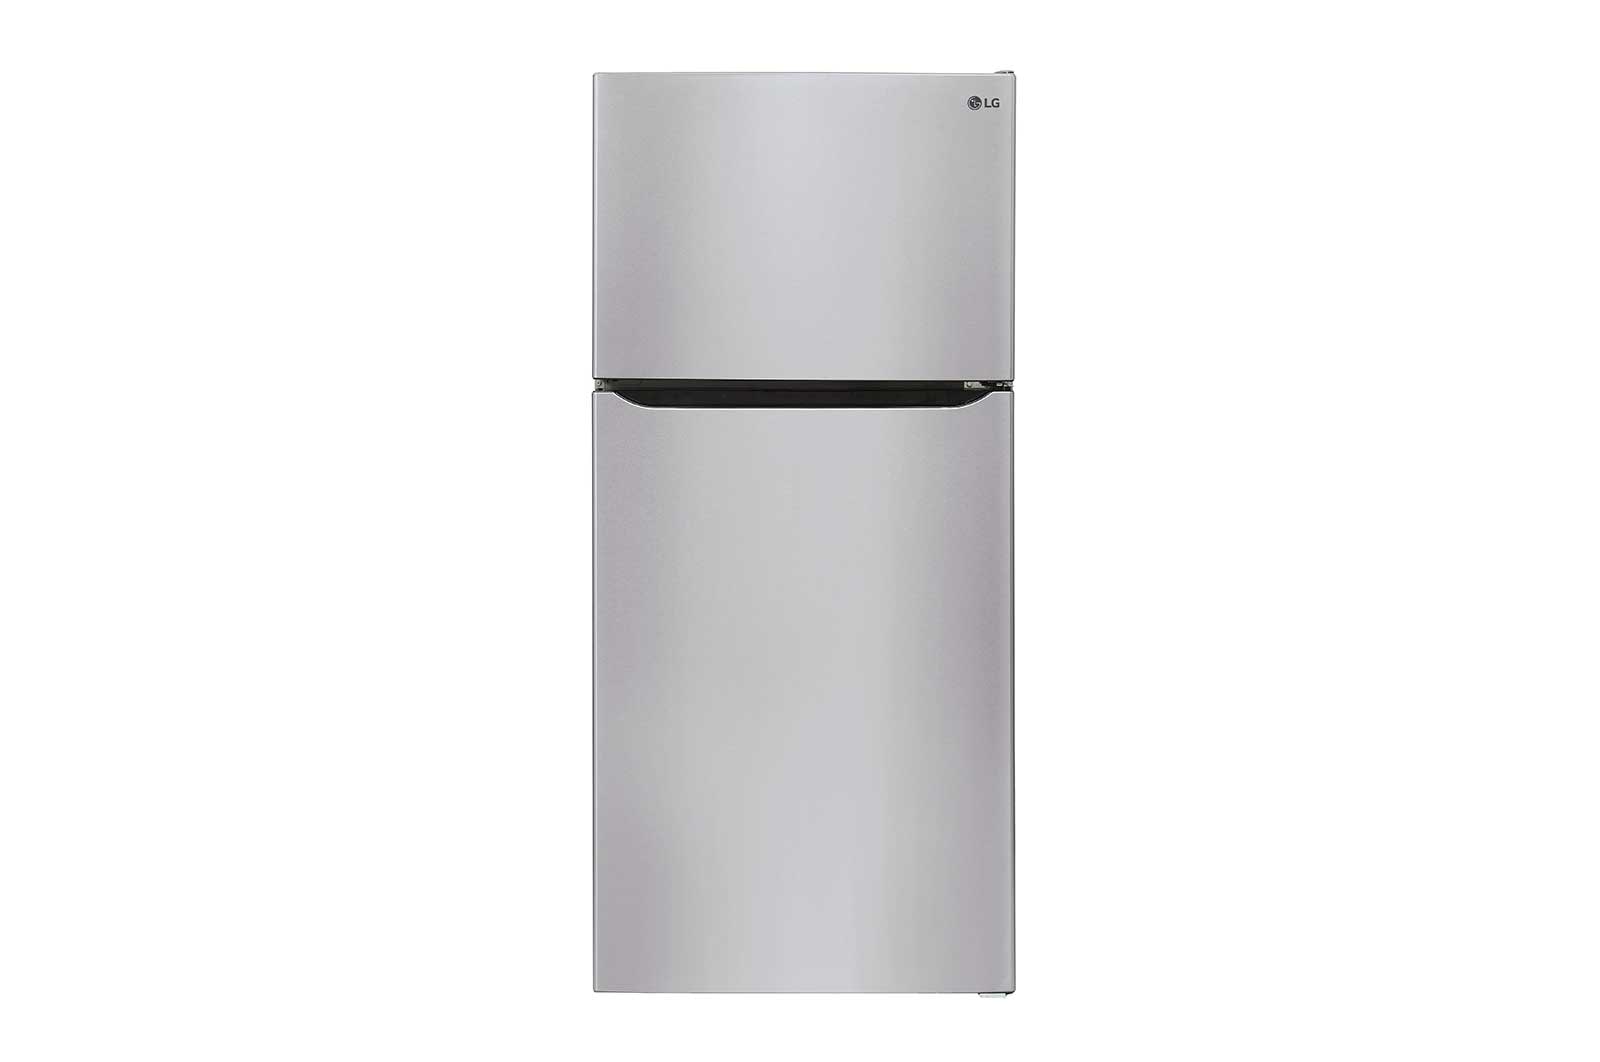 LG LRDCS2603S Refrigerator Review - Consumer Reports